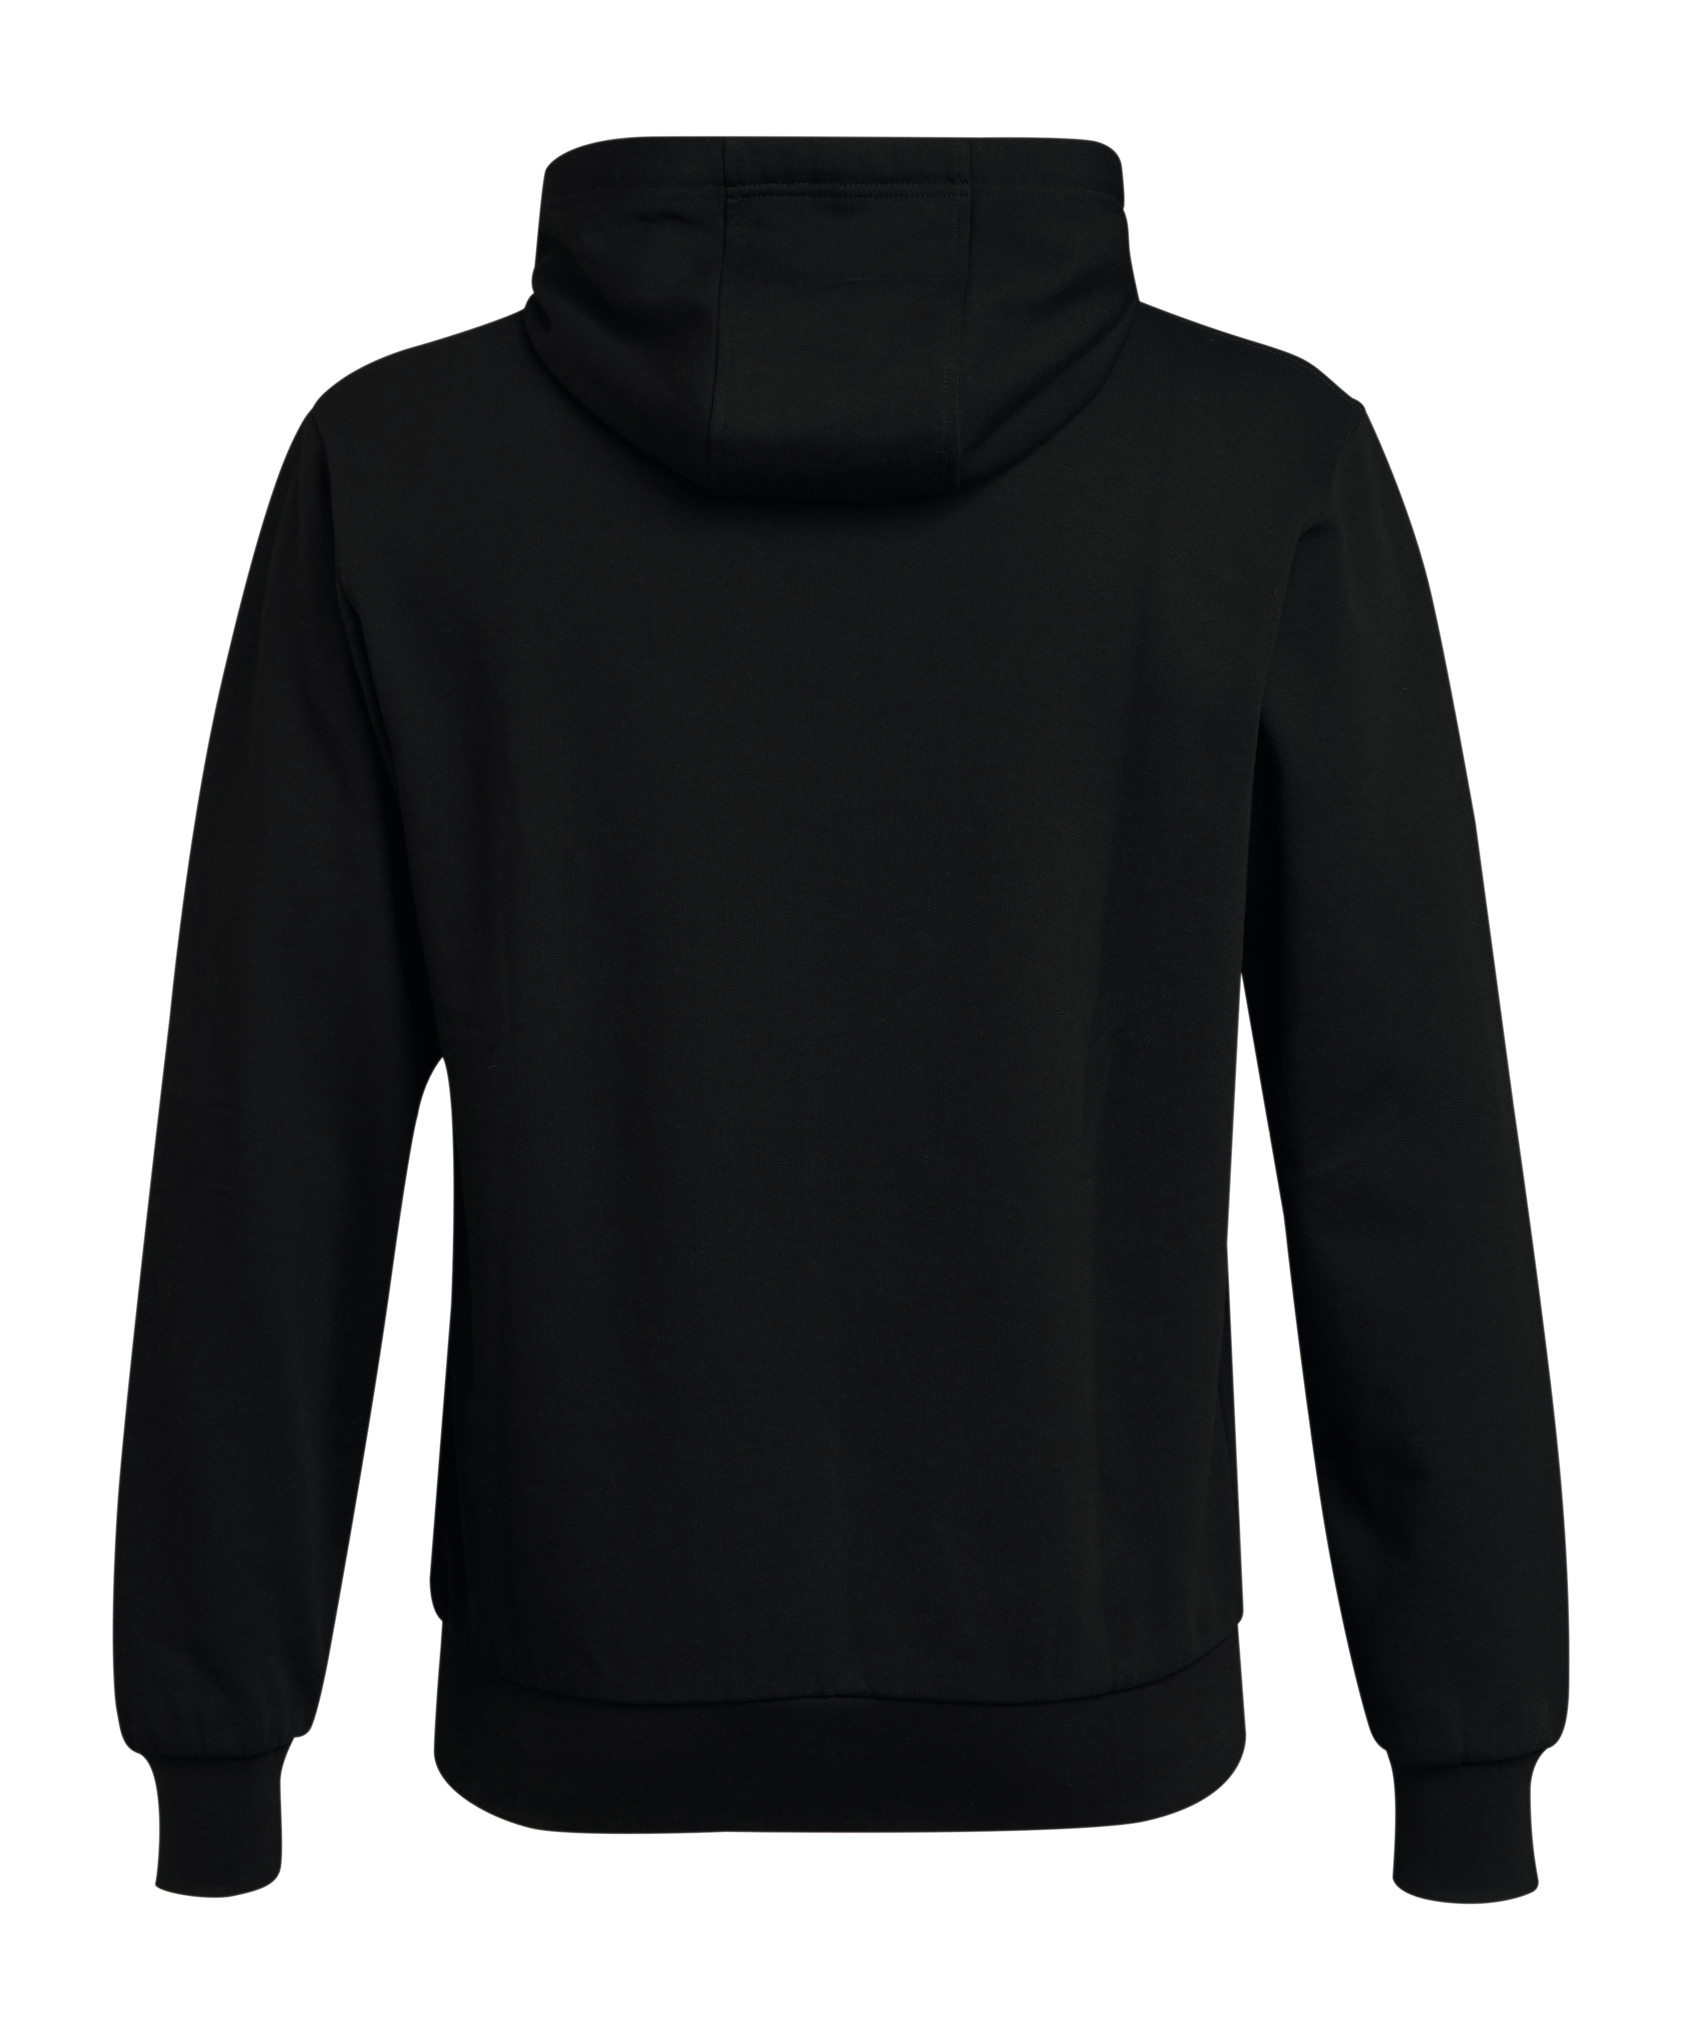 STIHL TIMBERSPORTS® classic logo hoodie